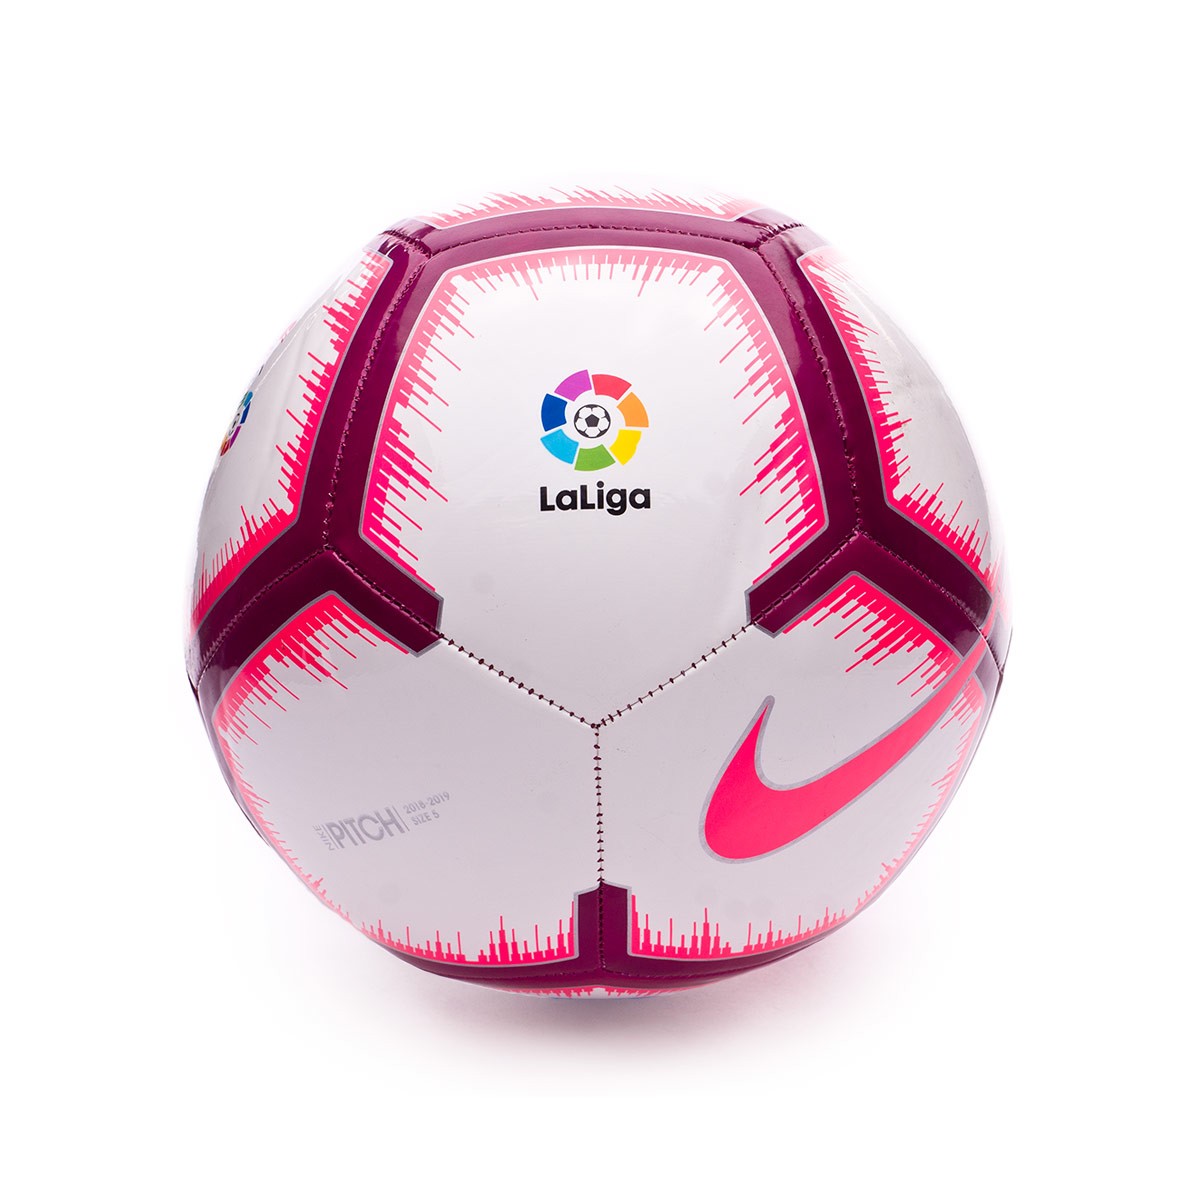 Balón Nike LaLiga Pitch 2018-2019 White-Pink flash-Team red - Tienda de  fútbol Fútbol Emotion